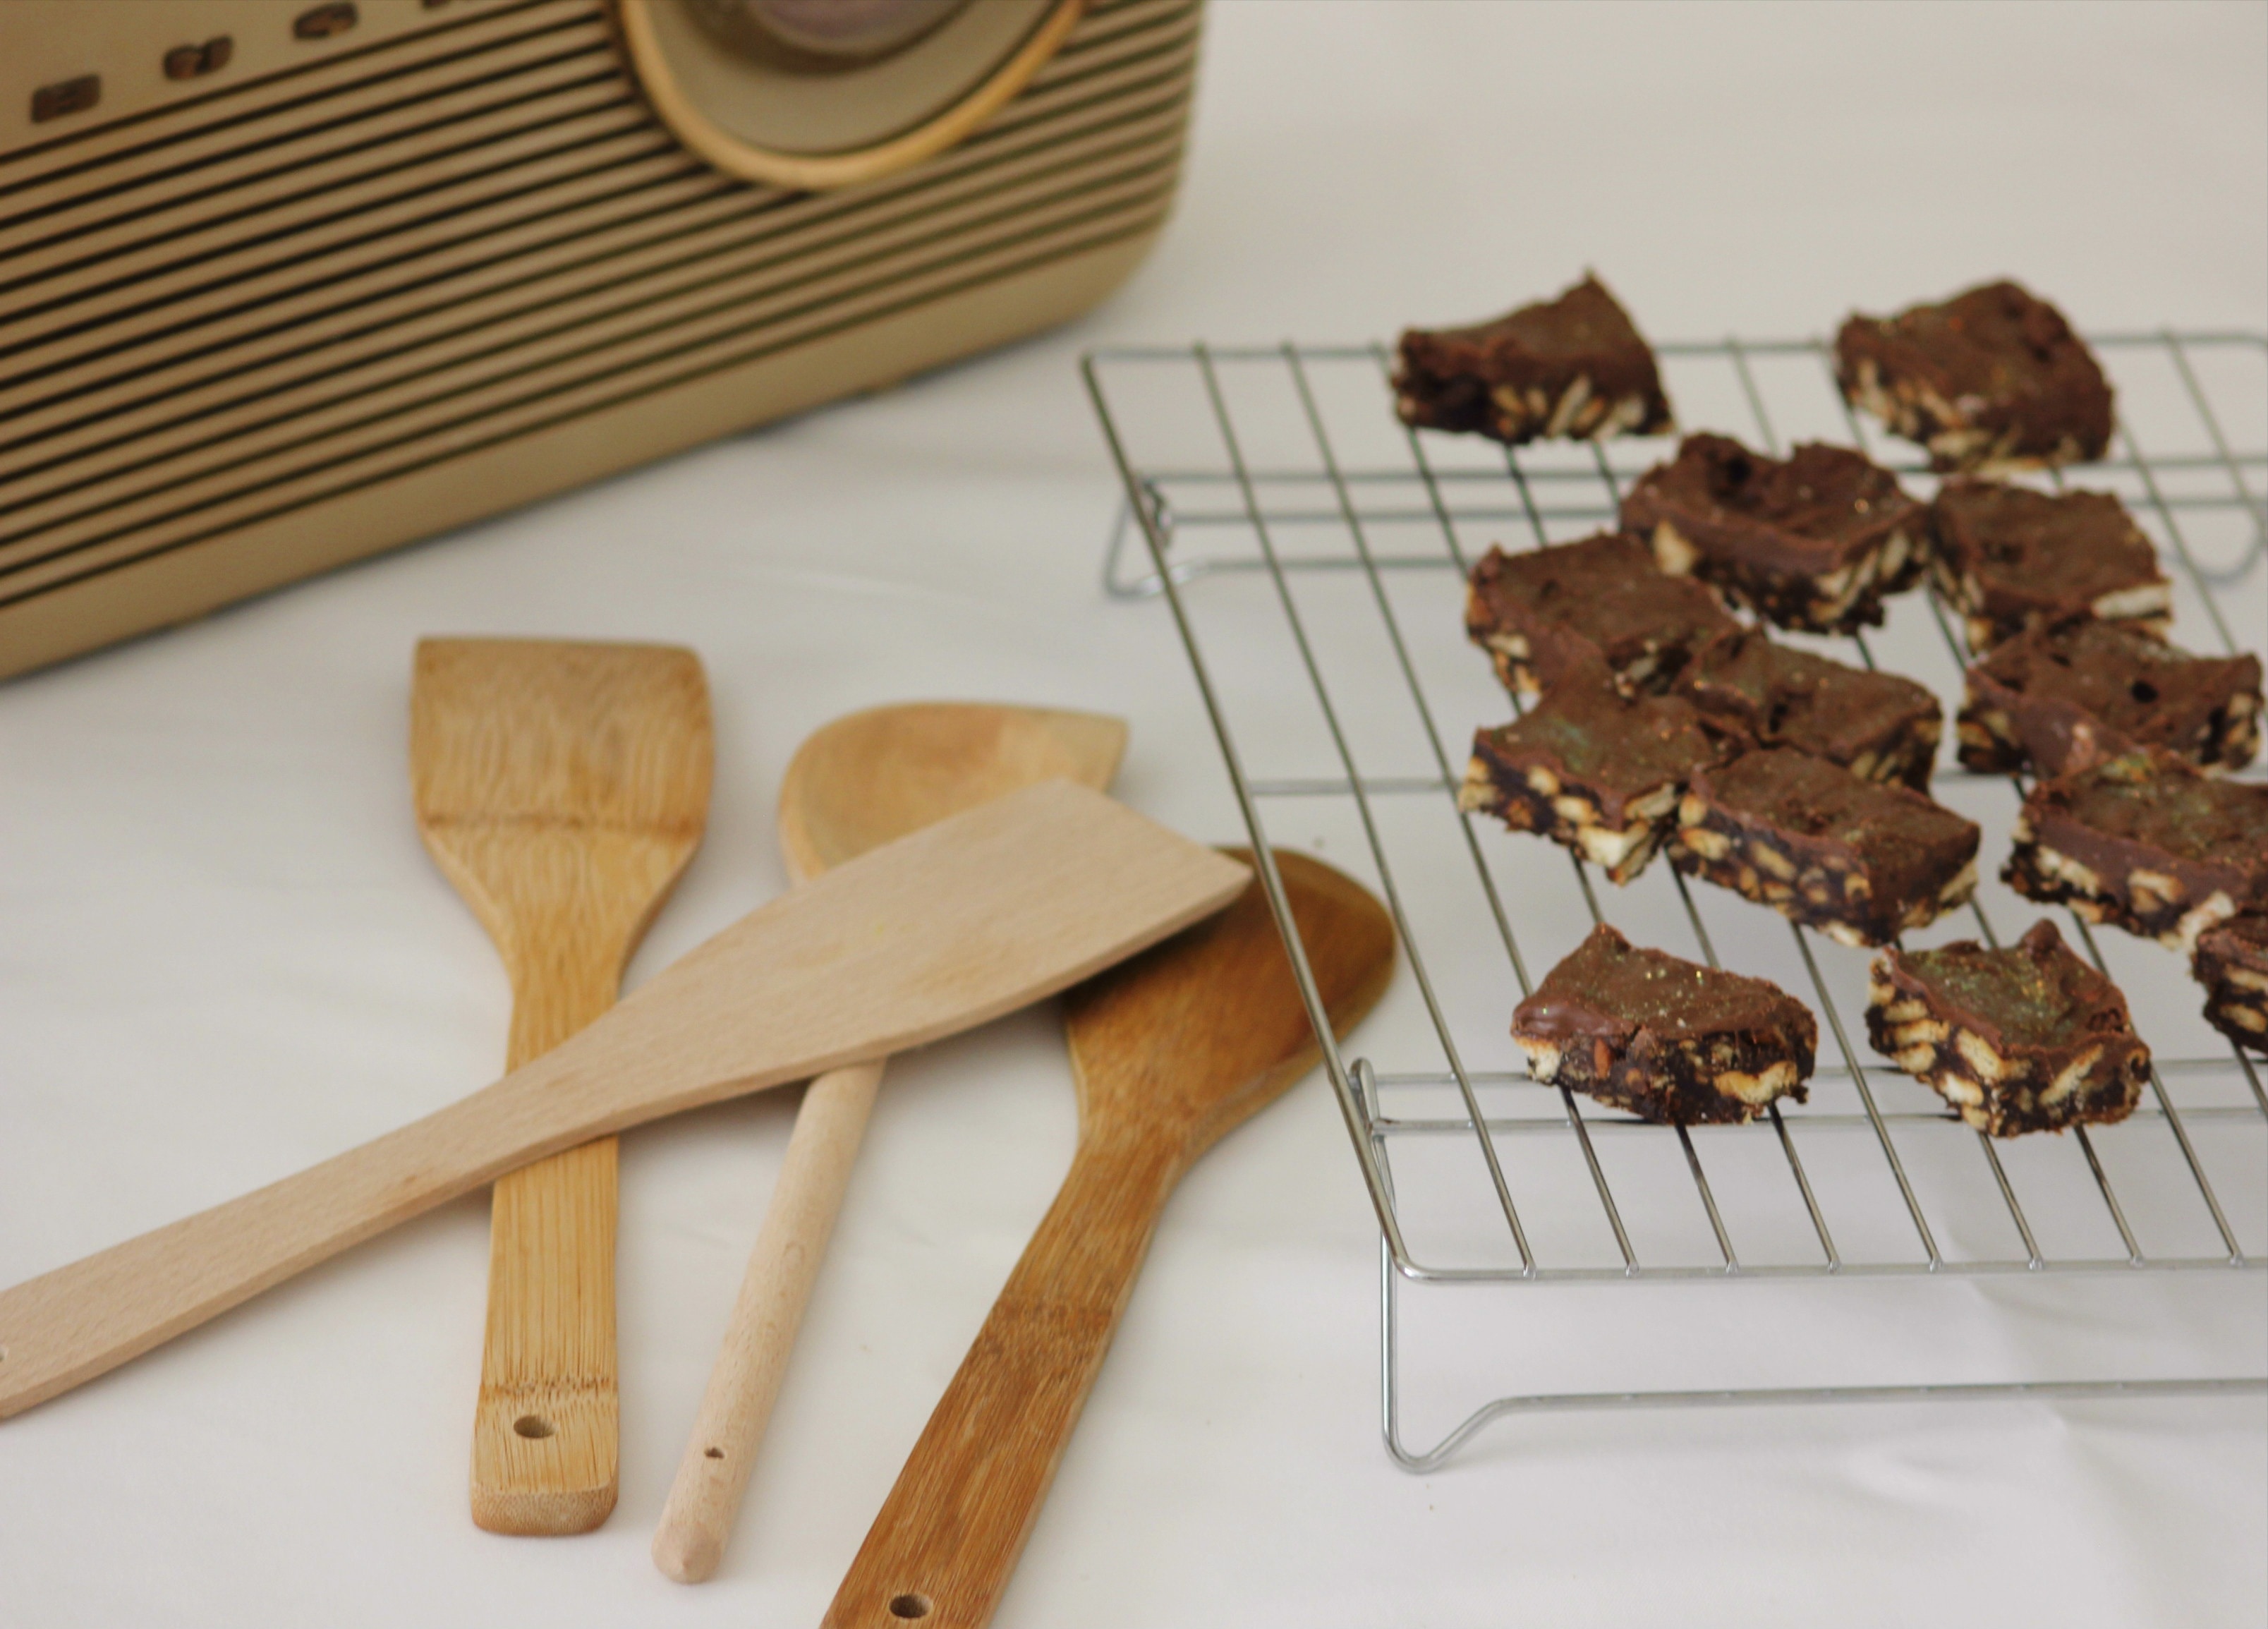 wooden spatulas near cookies on grill